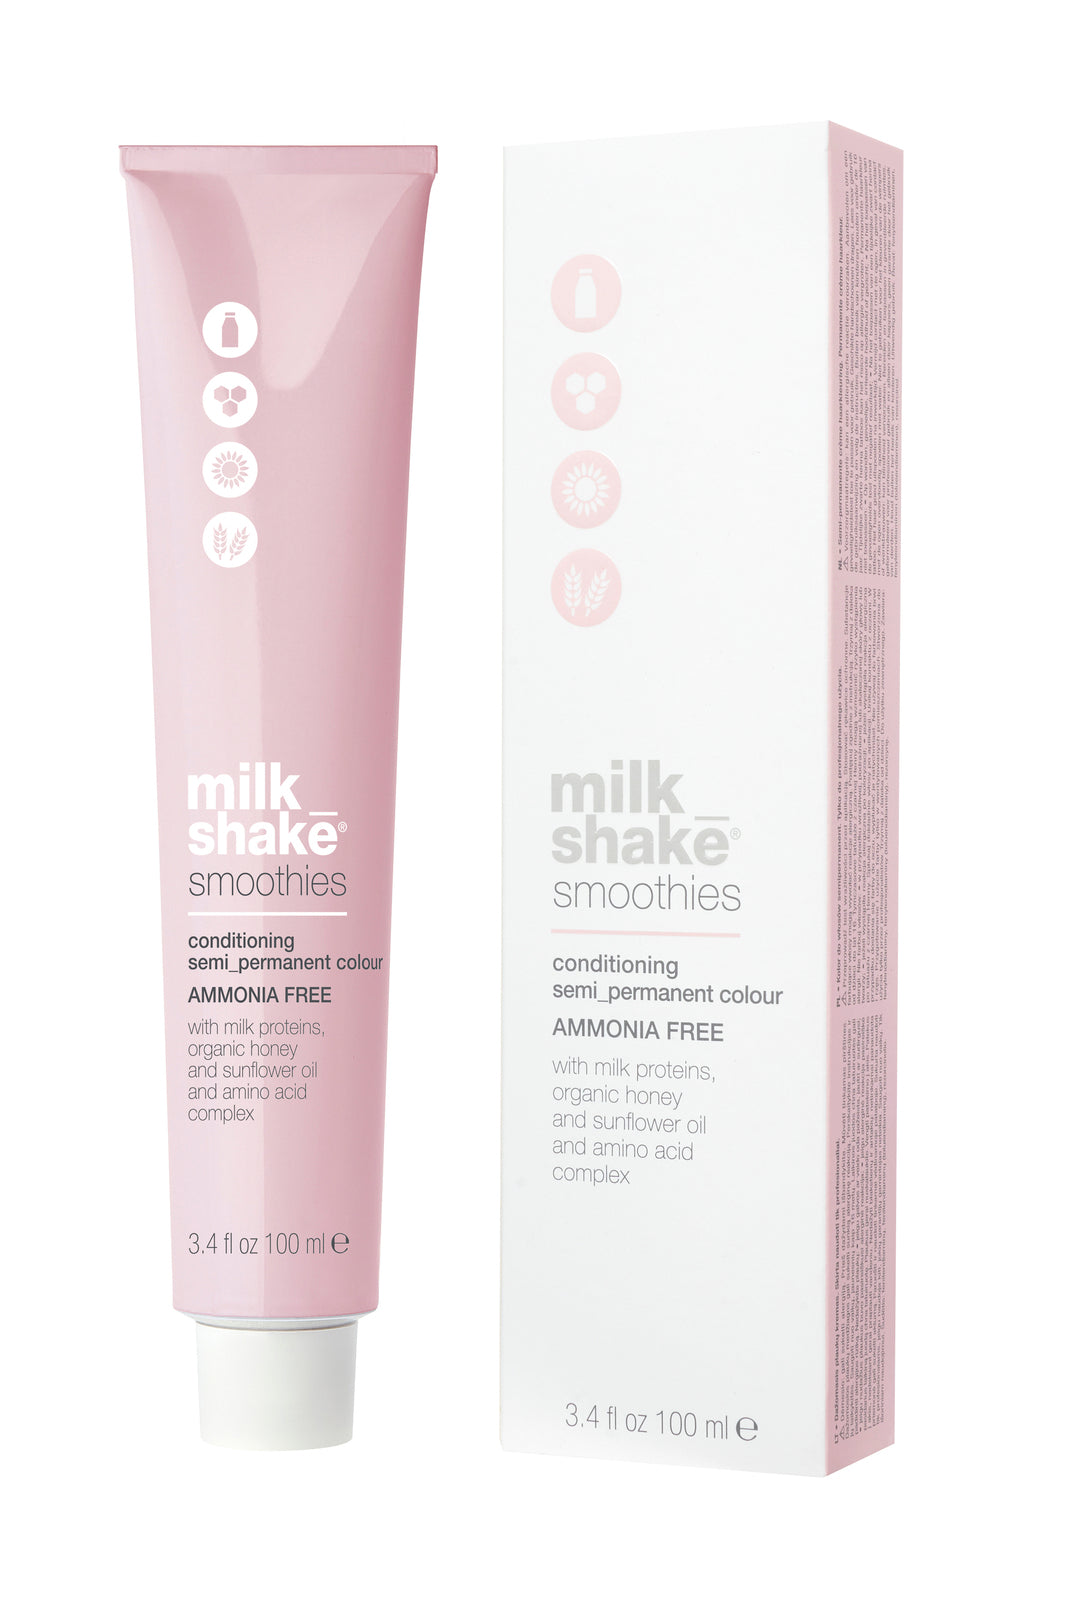 Milkshake smoothies semi-permanent color ORANGE